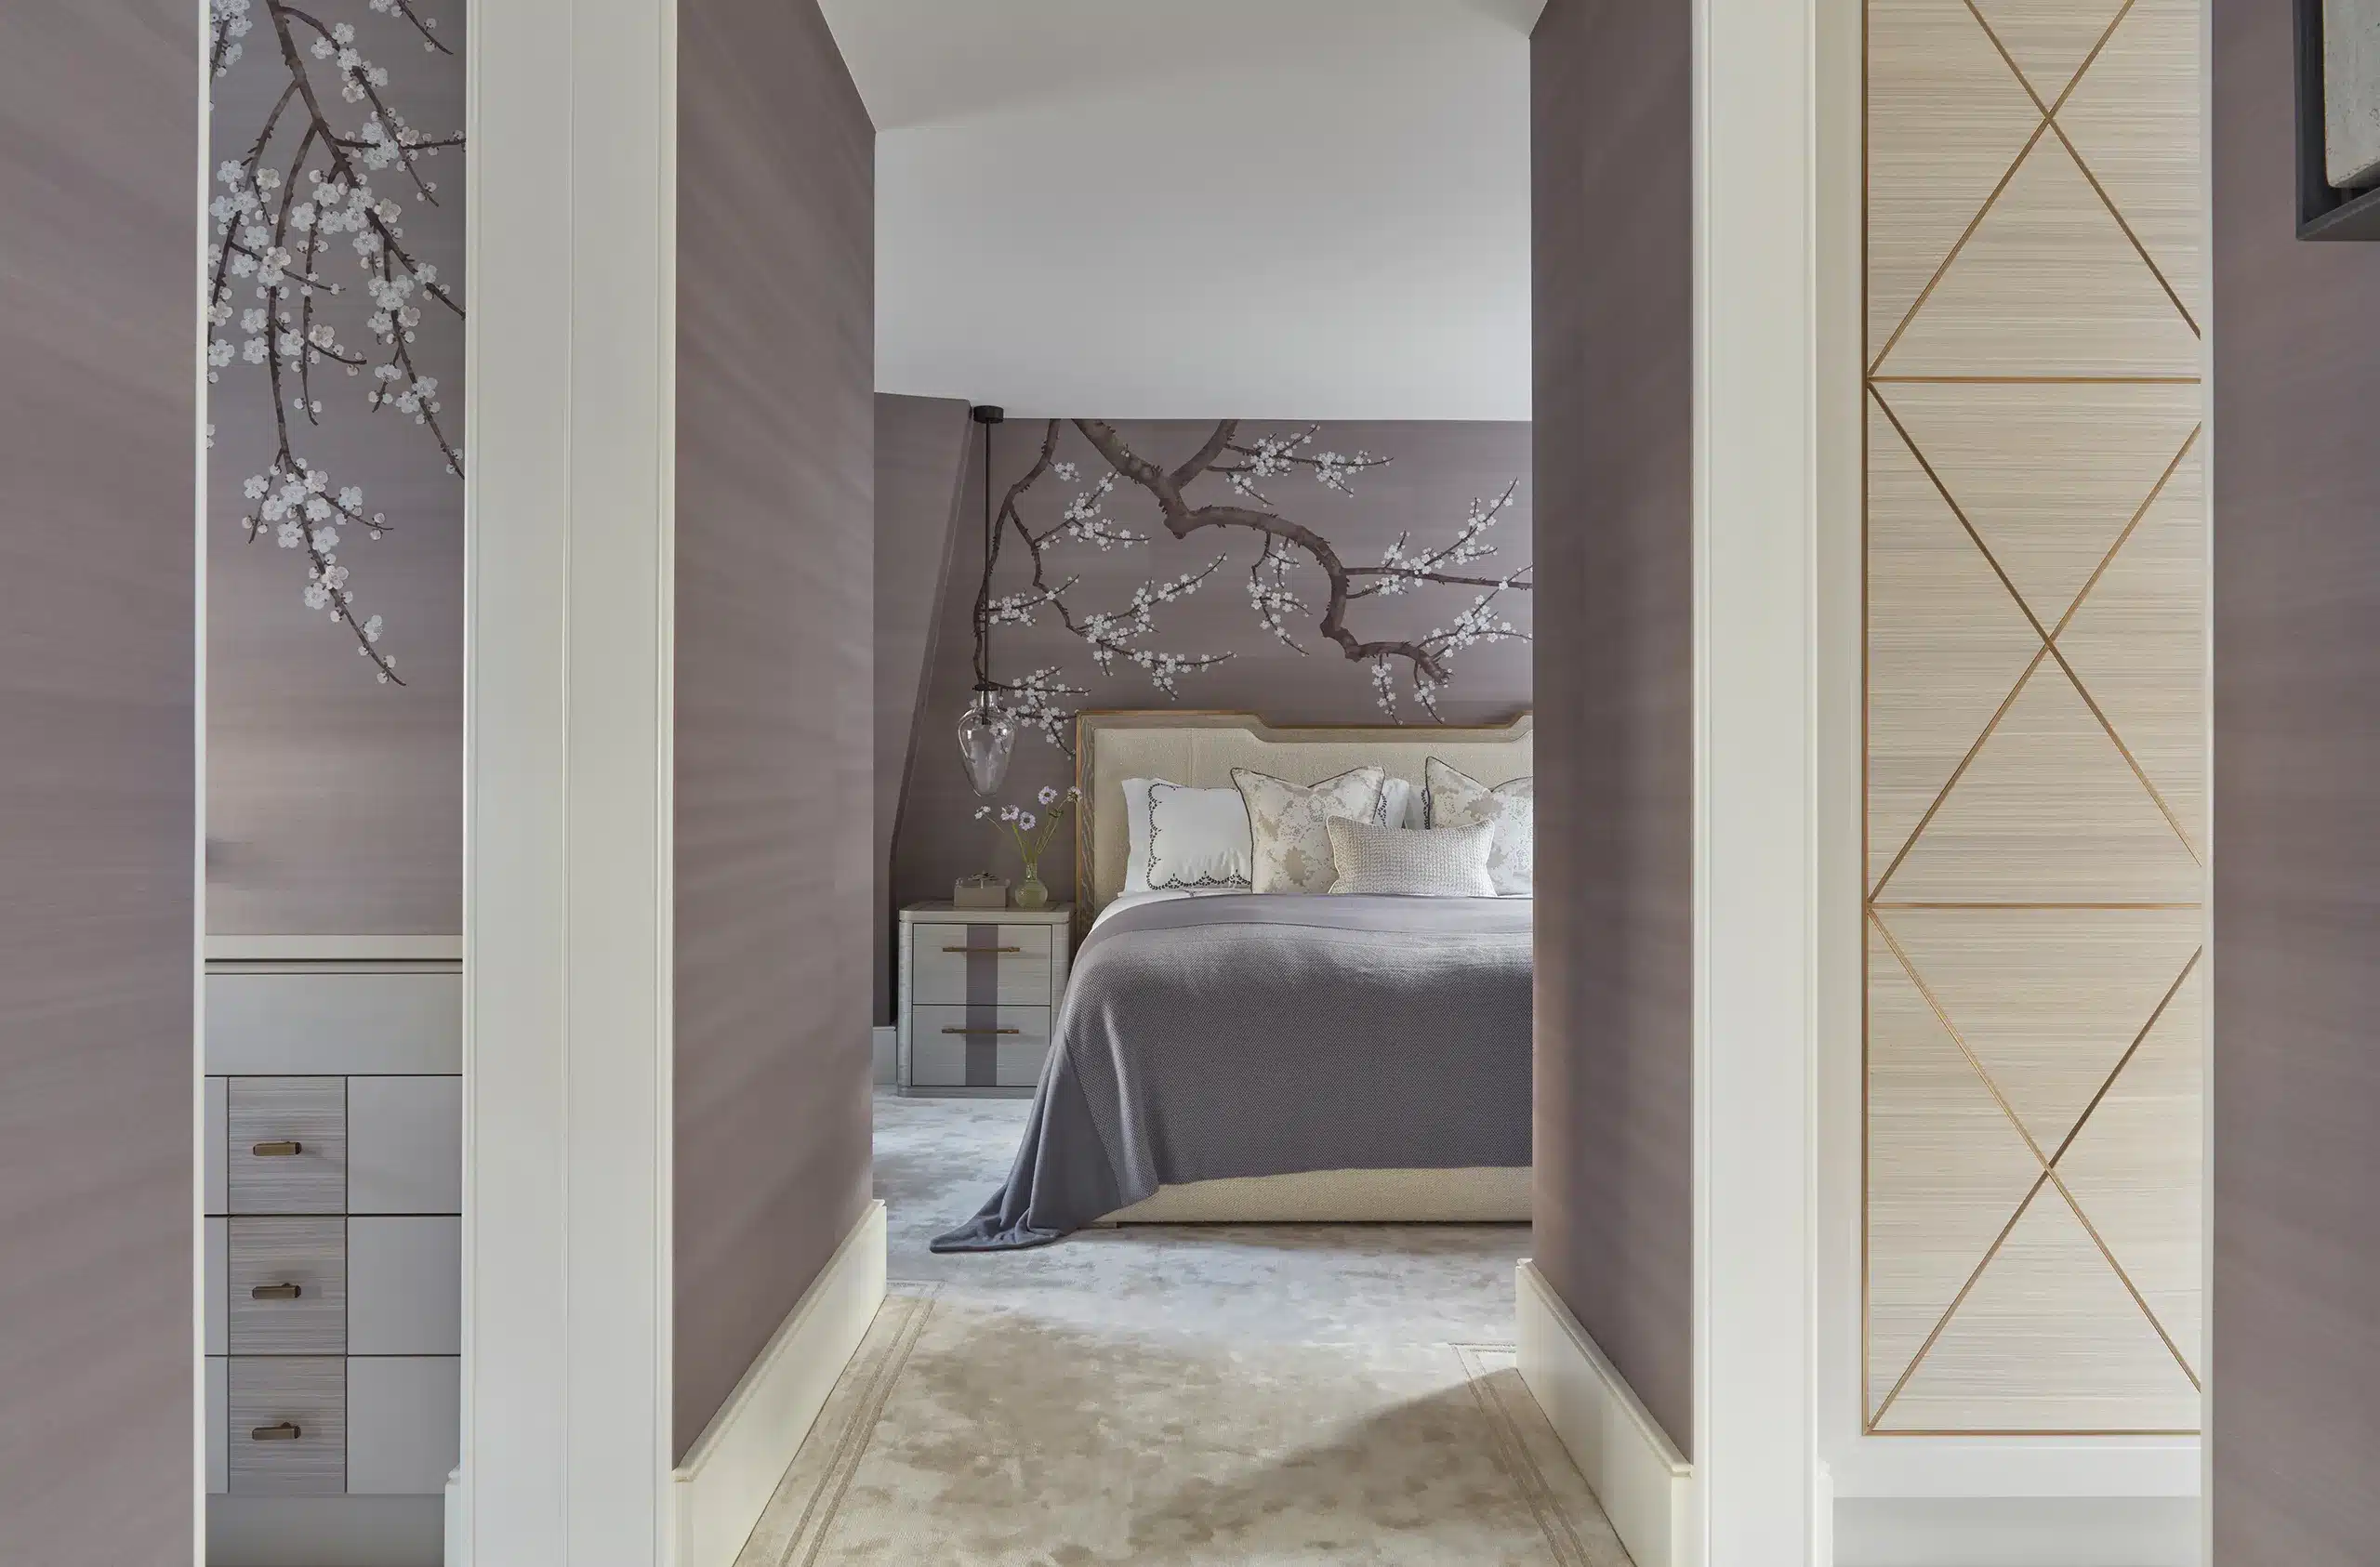 Master bedroom details in a purple hue as designed by award winning london design studio katharine pooley